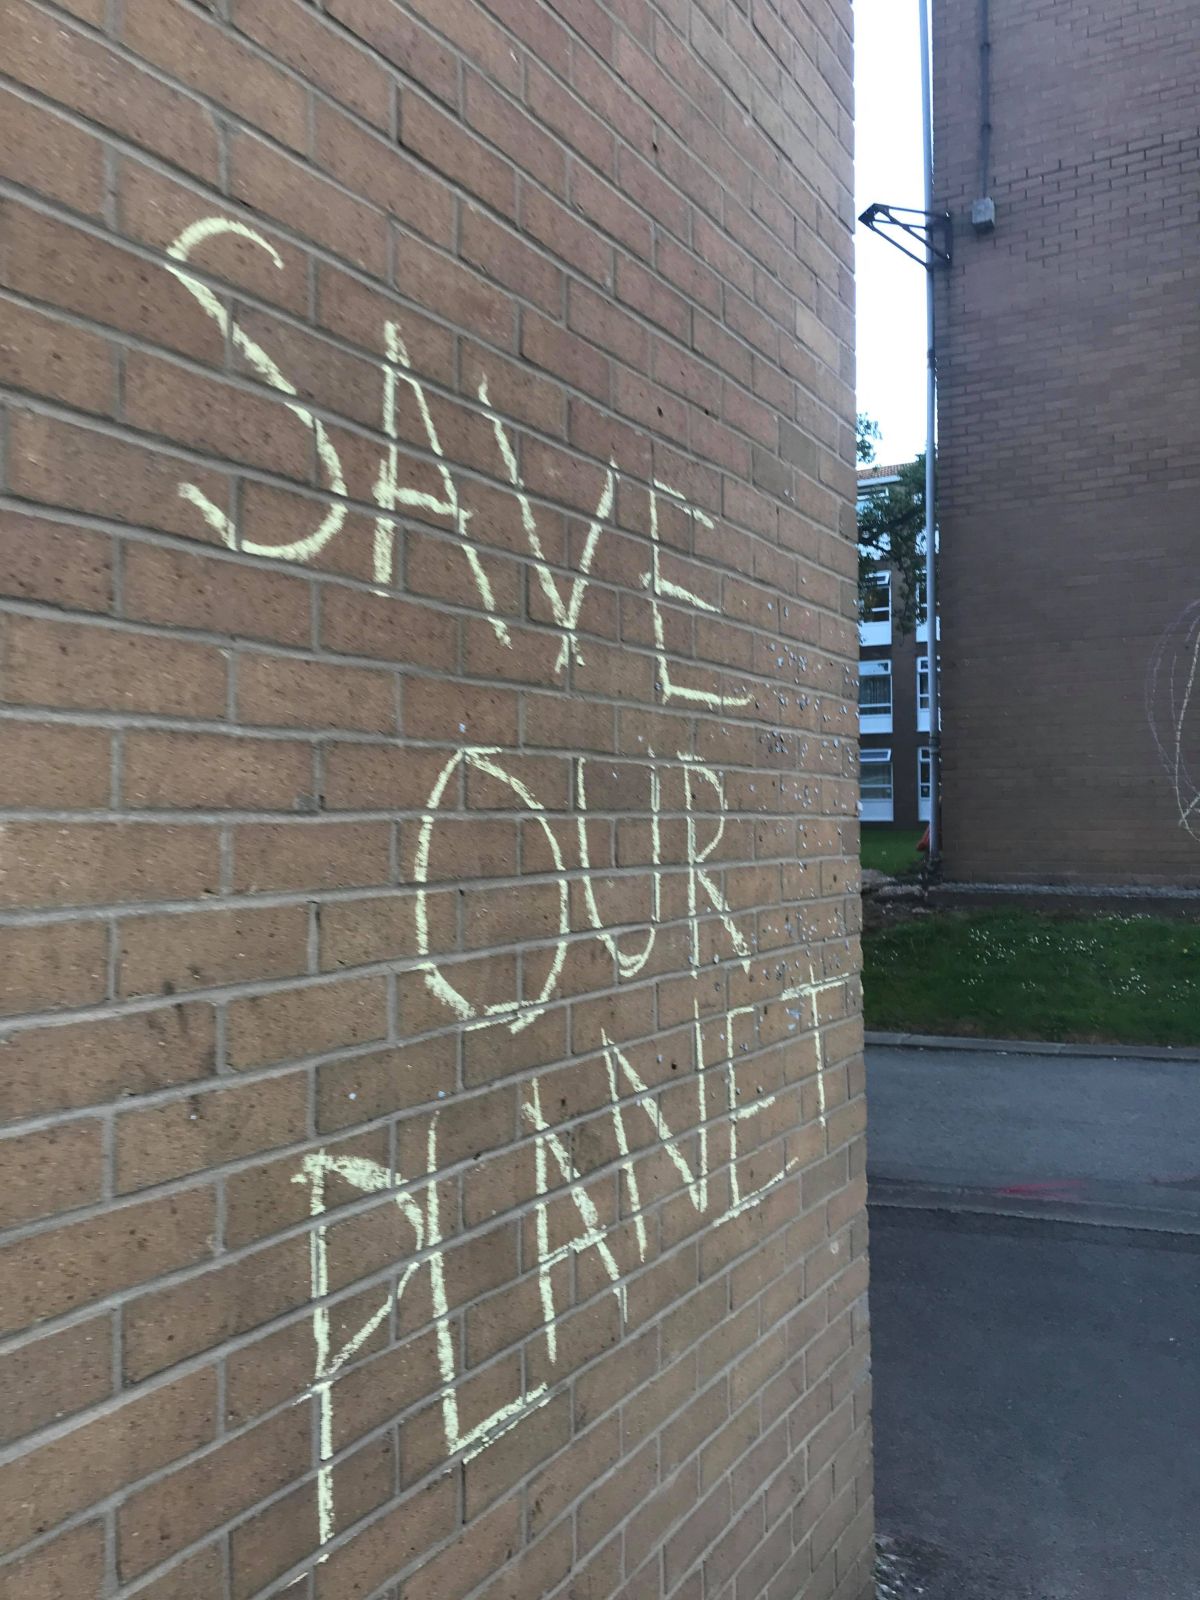 Extinction Rebellion graffiti appears at Oak House